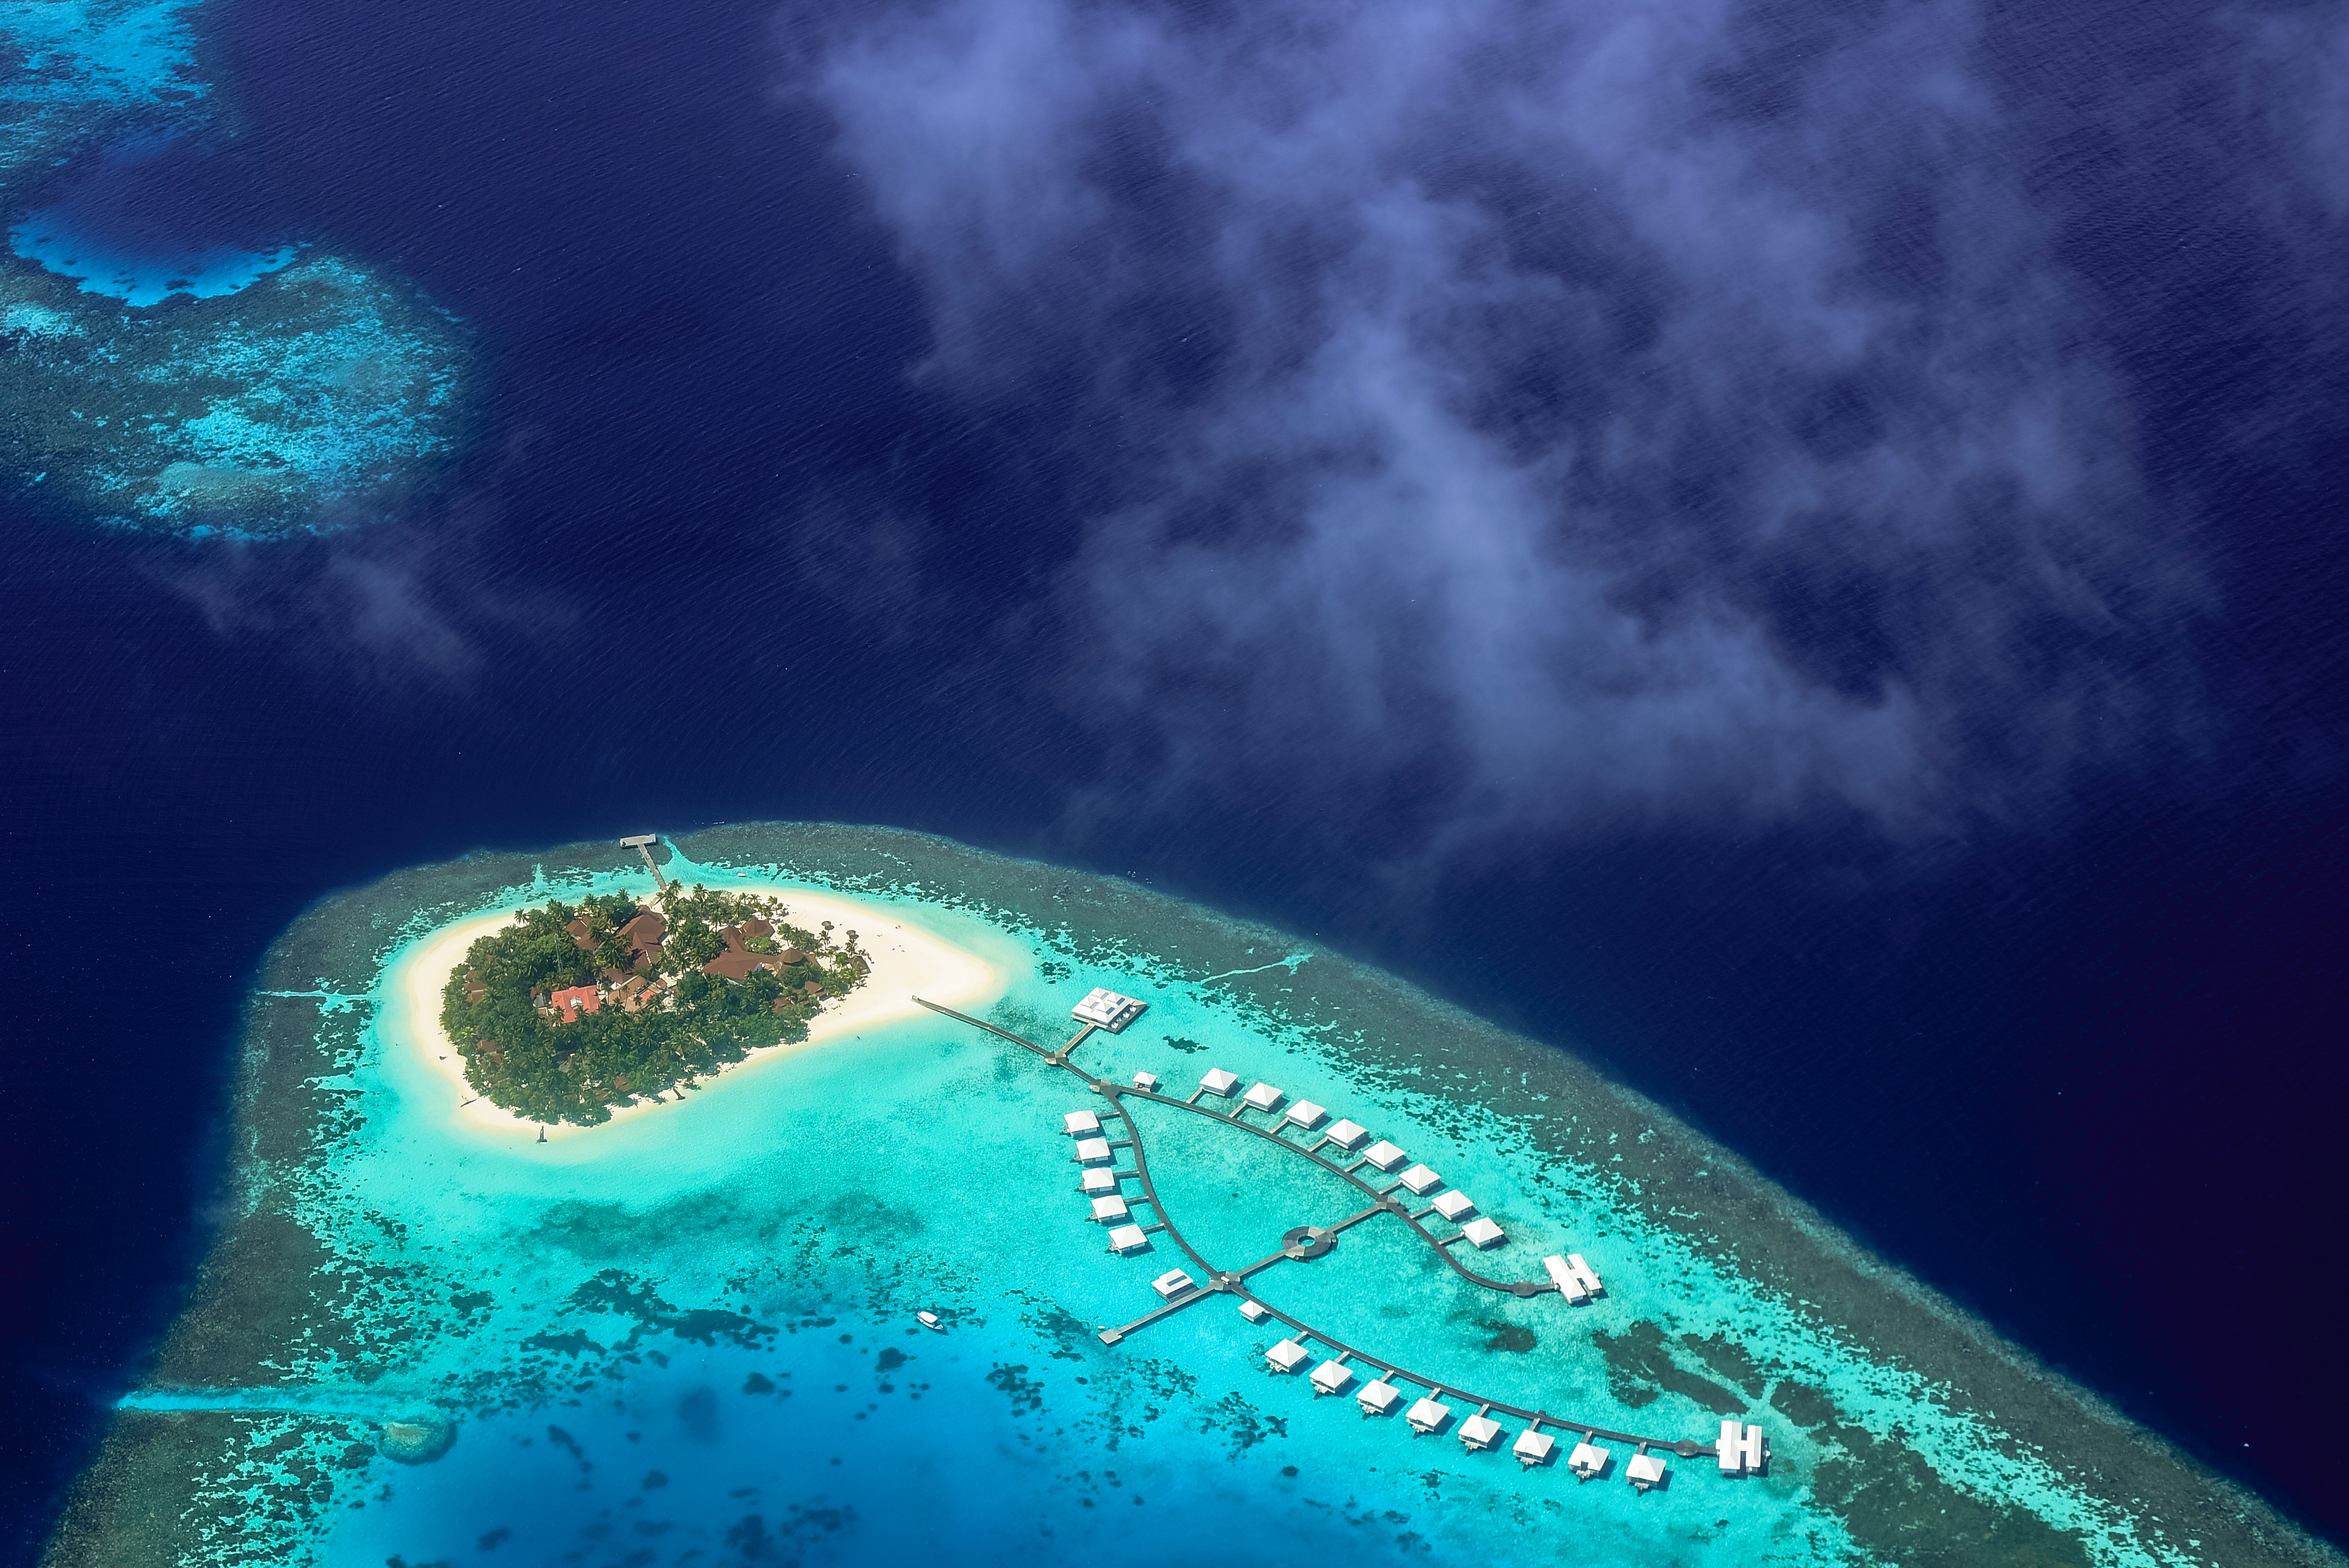 Alila Kothaifaru Maldives